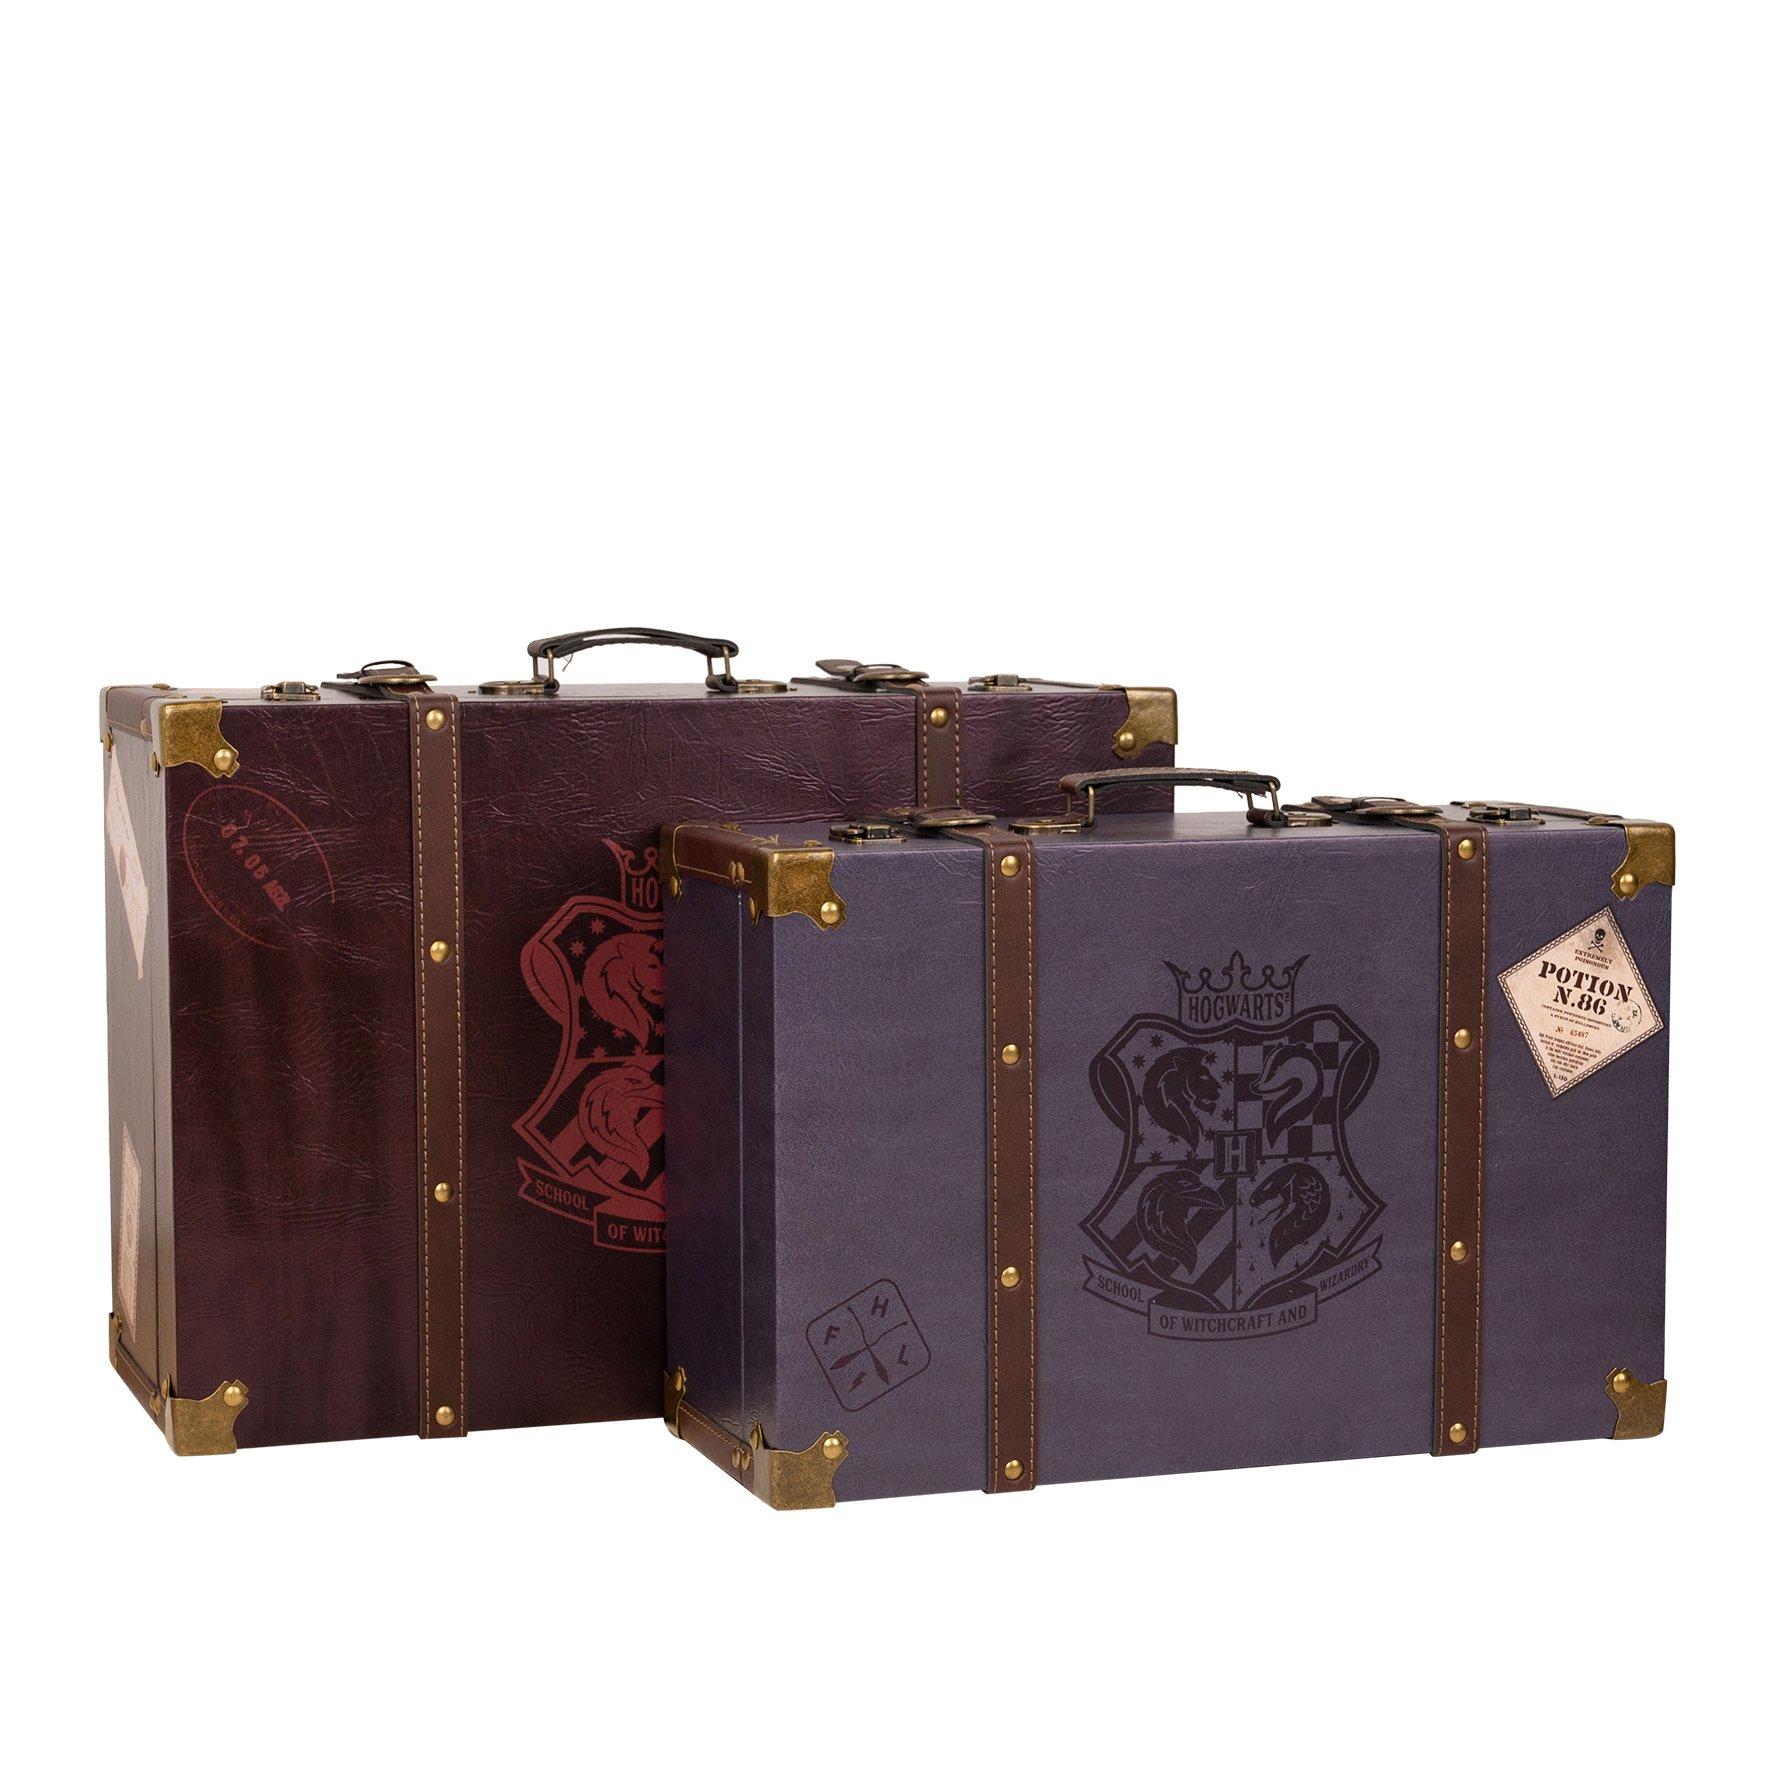 Harry Potter Alumni Burgandy Suitcase Set of 2